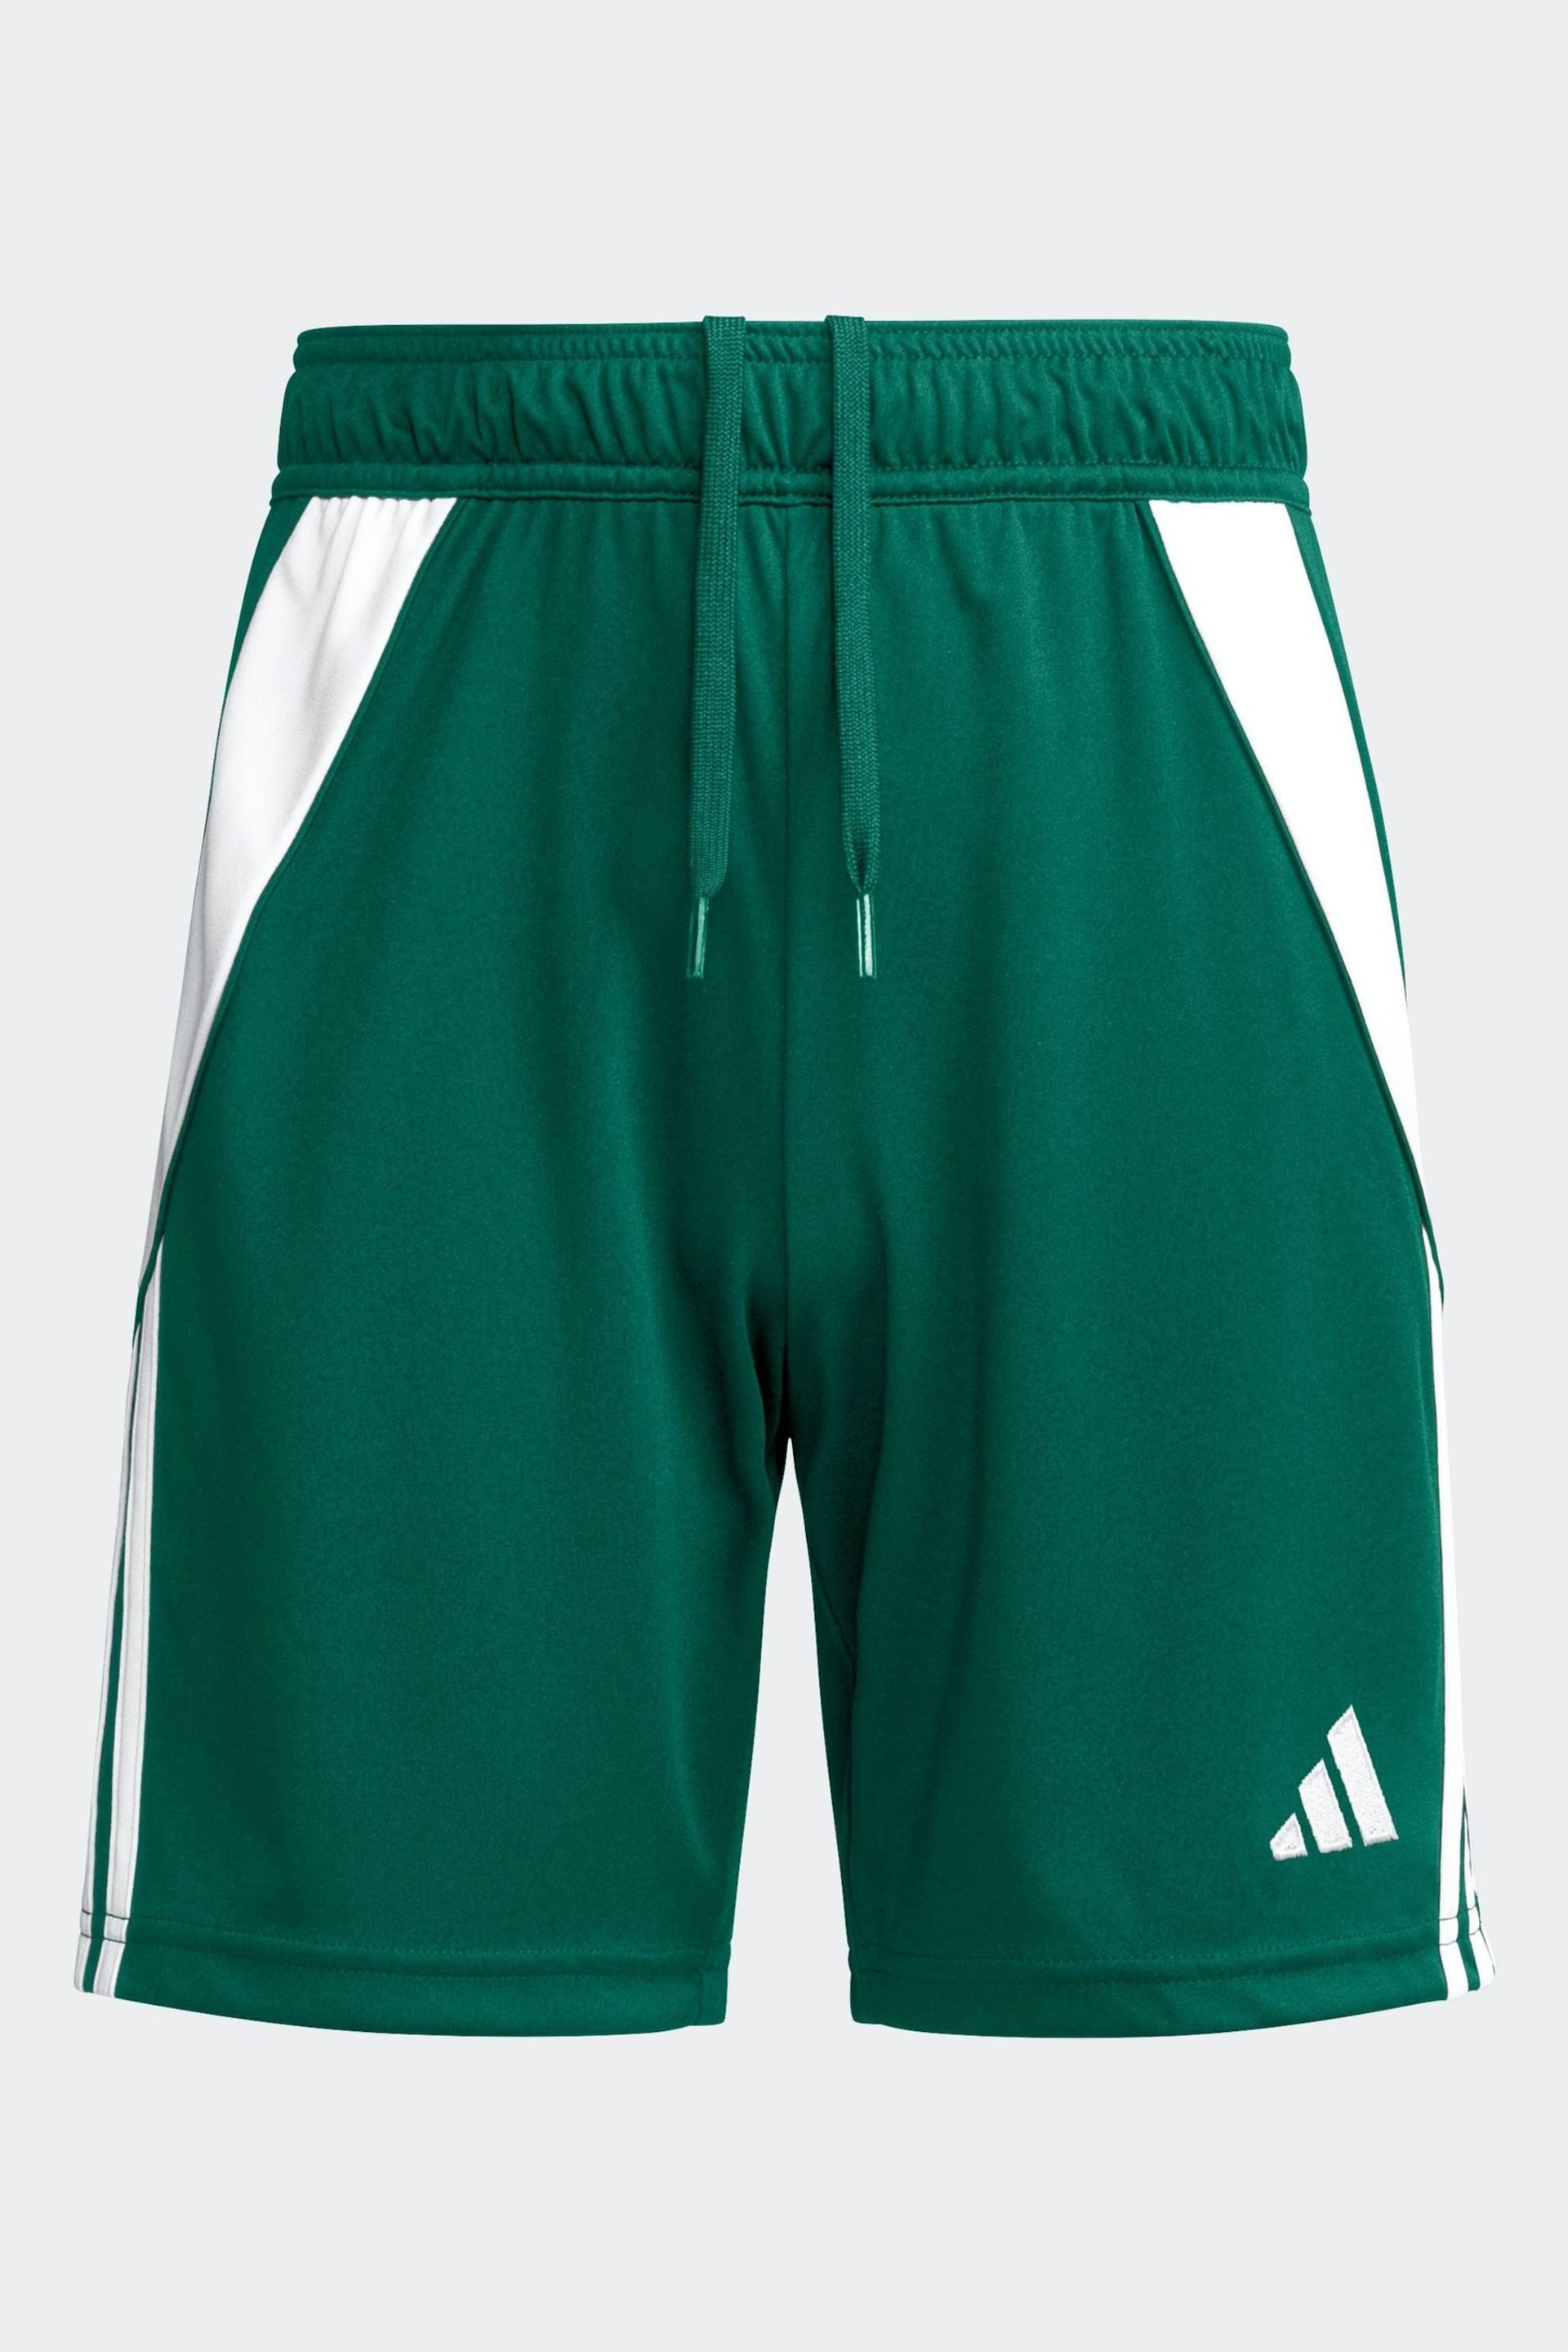 adidas Dark Green Tiro 24 Shorts - Image 1 of 2